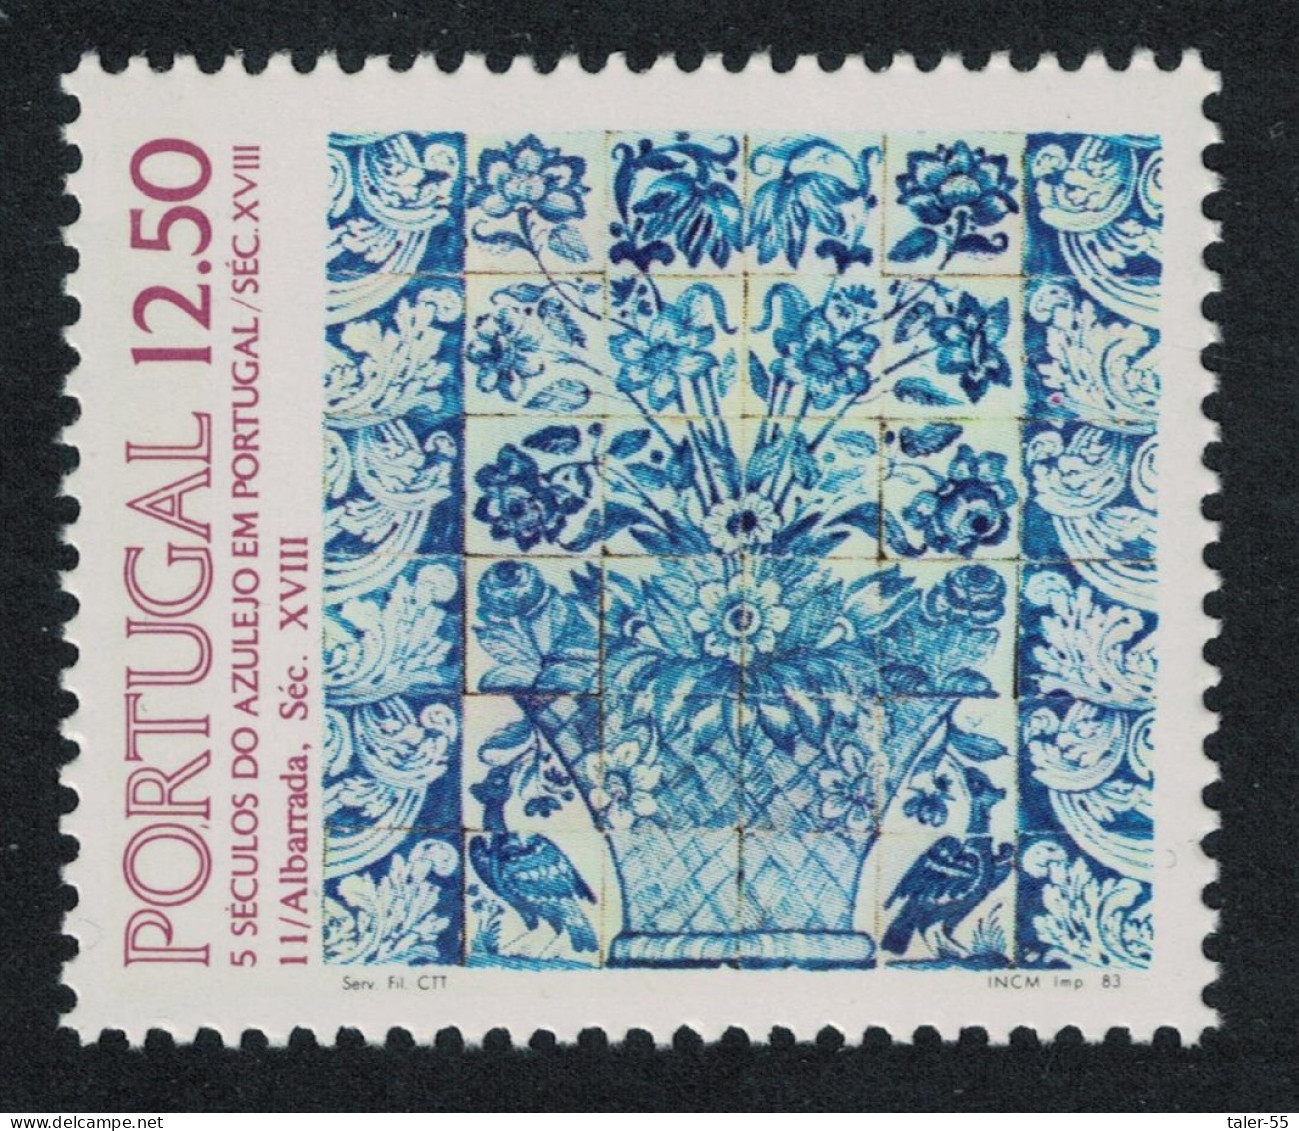 Portugal Tiles 11th Series 1983 MNH SG#1935 - Ongebruikt